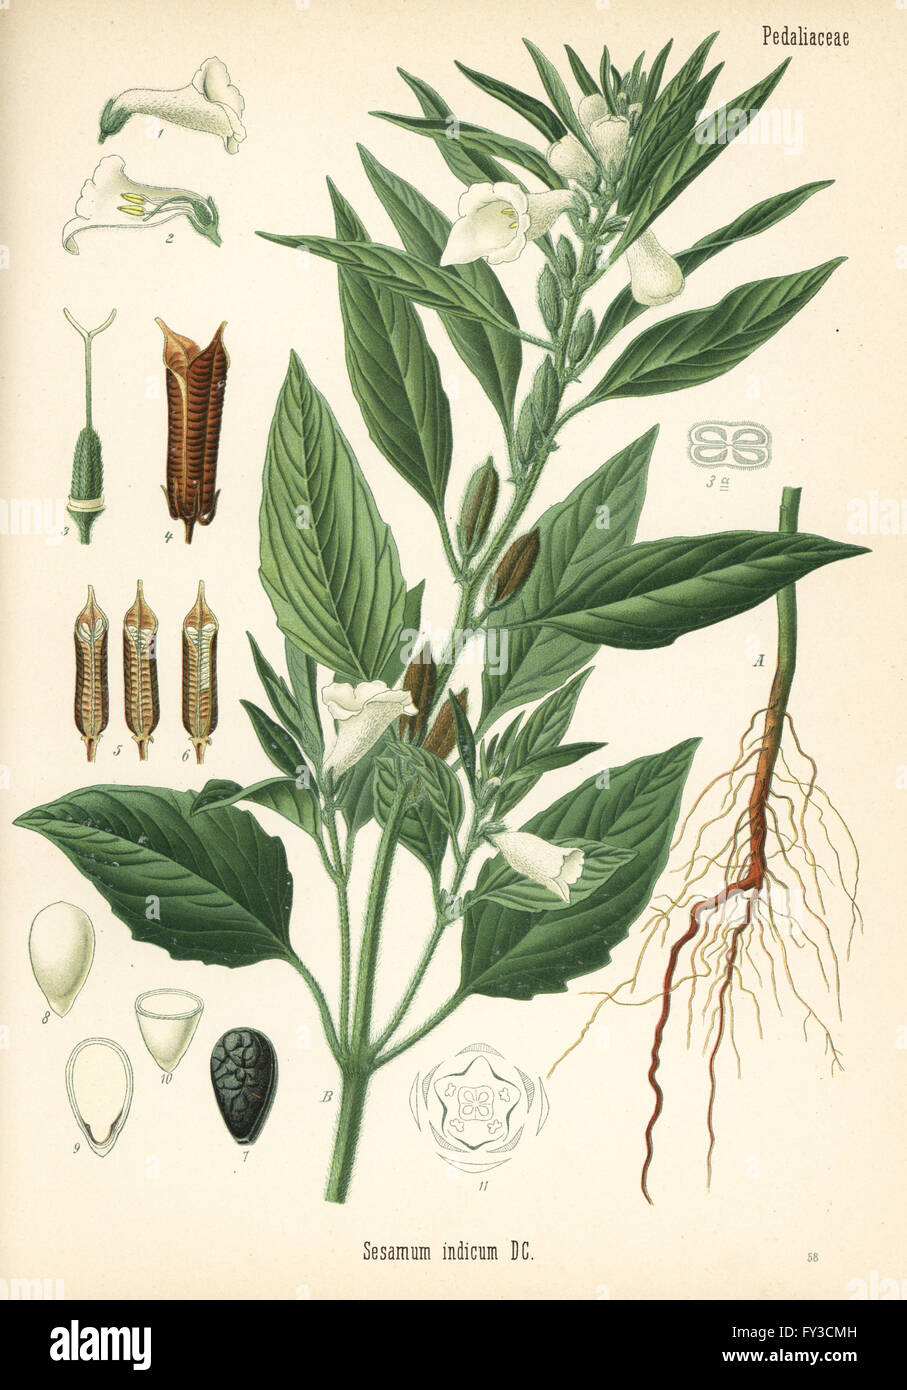 Sesame, Sesamum indicum. Chromolithograph after a botanical illustration from Hermann Adolph Koehler's Medicinal Plants, edited by Gustav Pabst, Koehler, Germany, 1887. Stock Photo